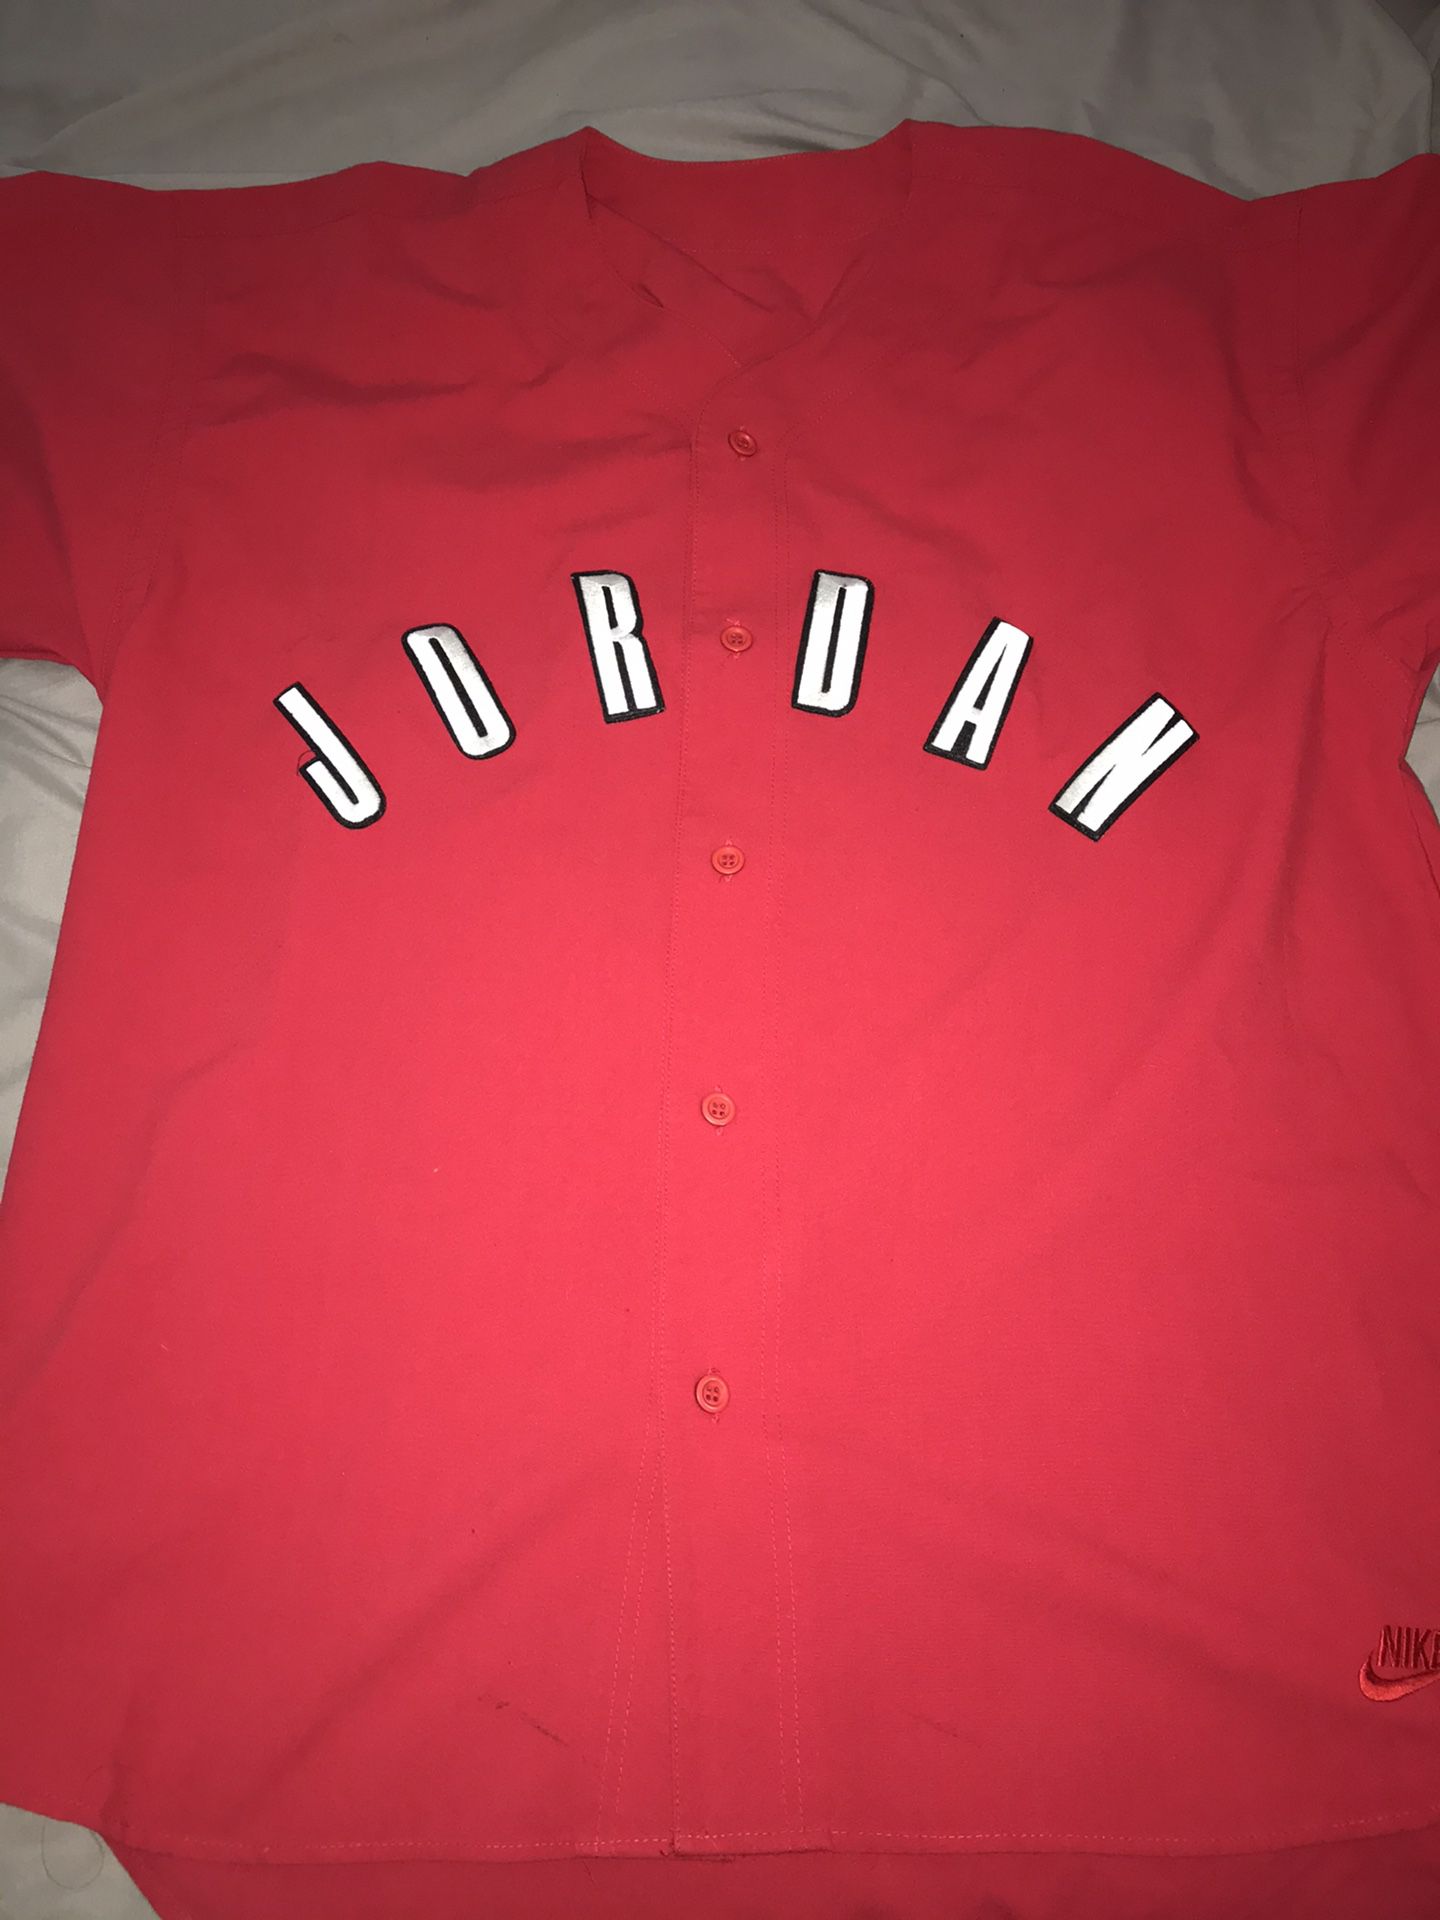 Vintage Nike Michael Jordan baseball jersey for Sale in Houston, TX